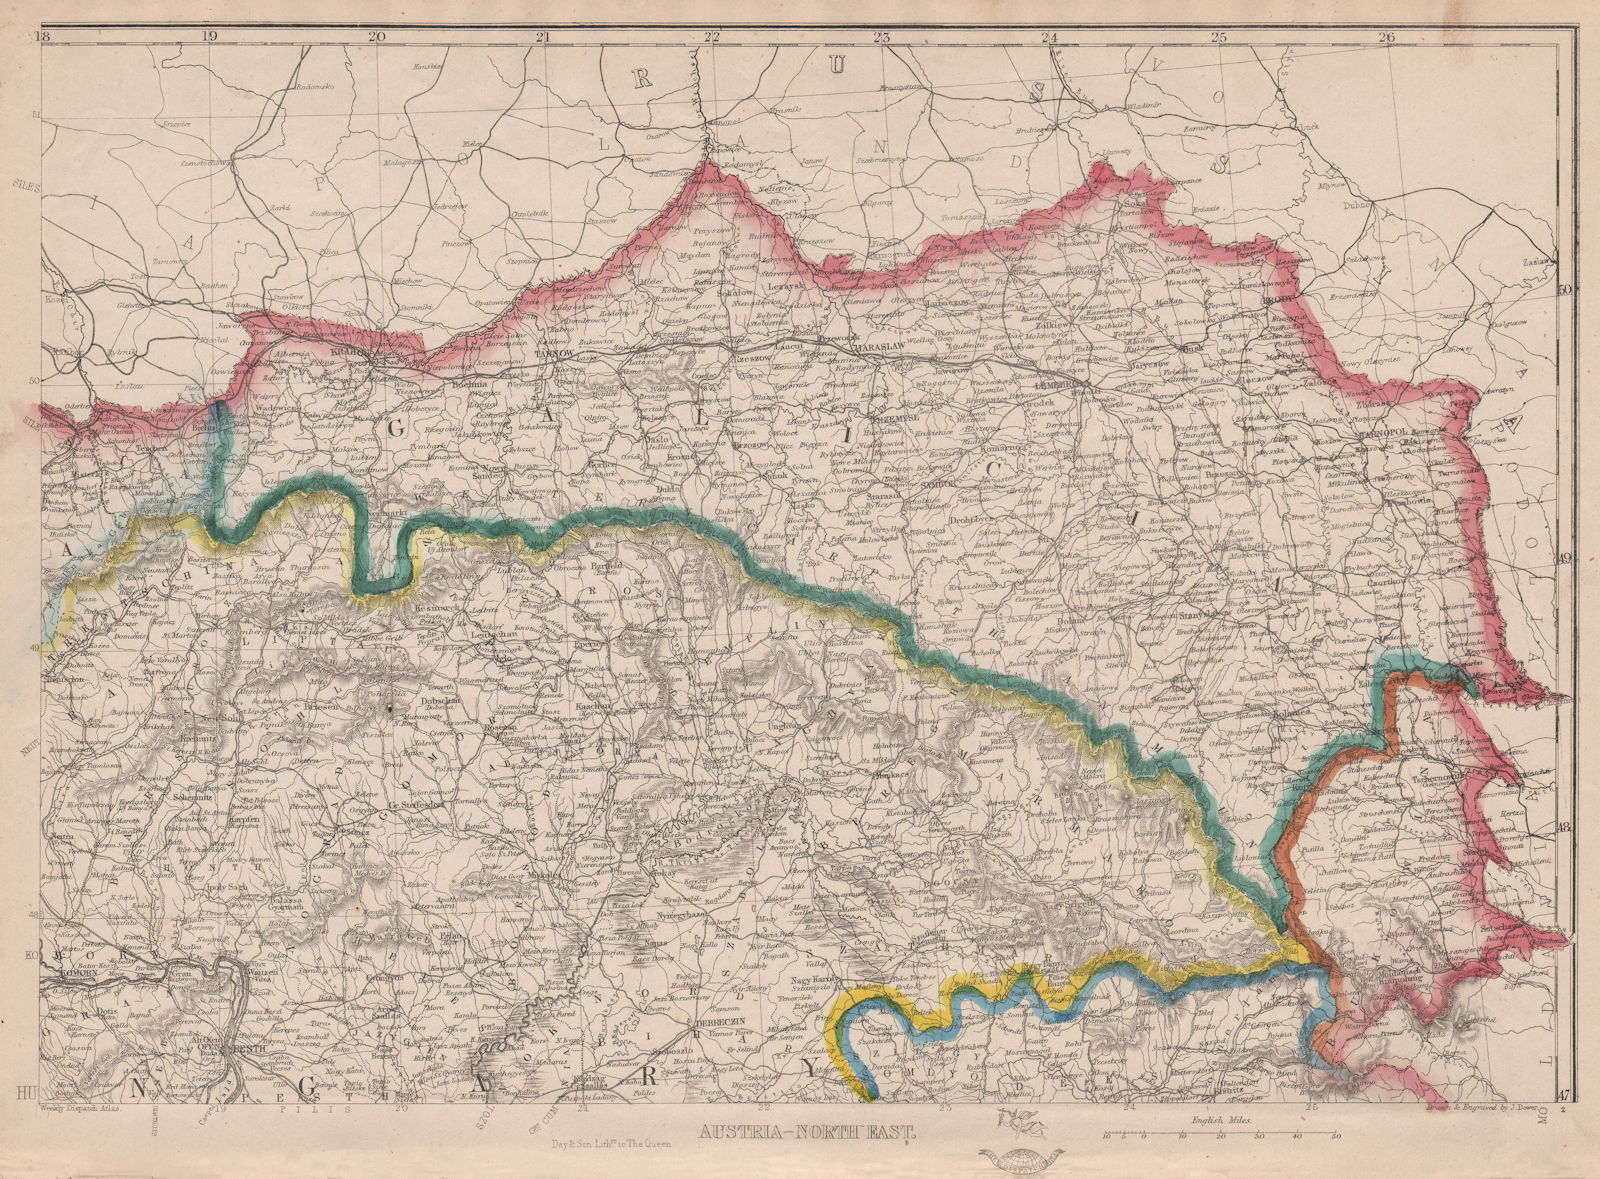 AUSTRIAN EMPIRE NORTH EAST. Galicia Budapest Krakow Lemberg. DOWER 1863 map